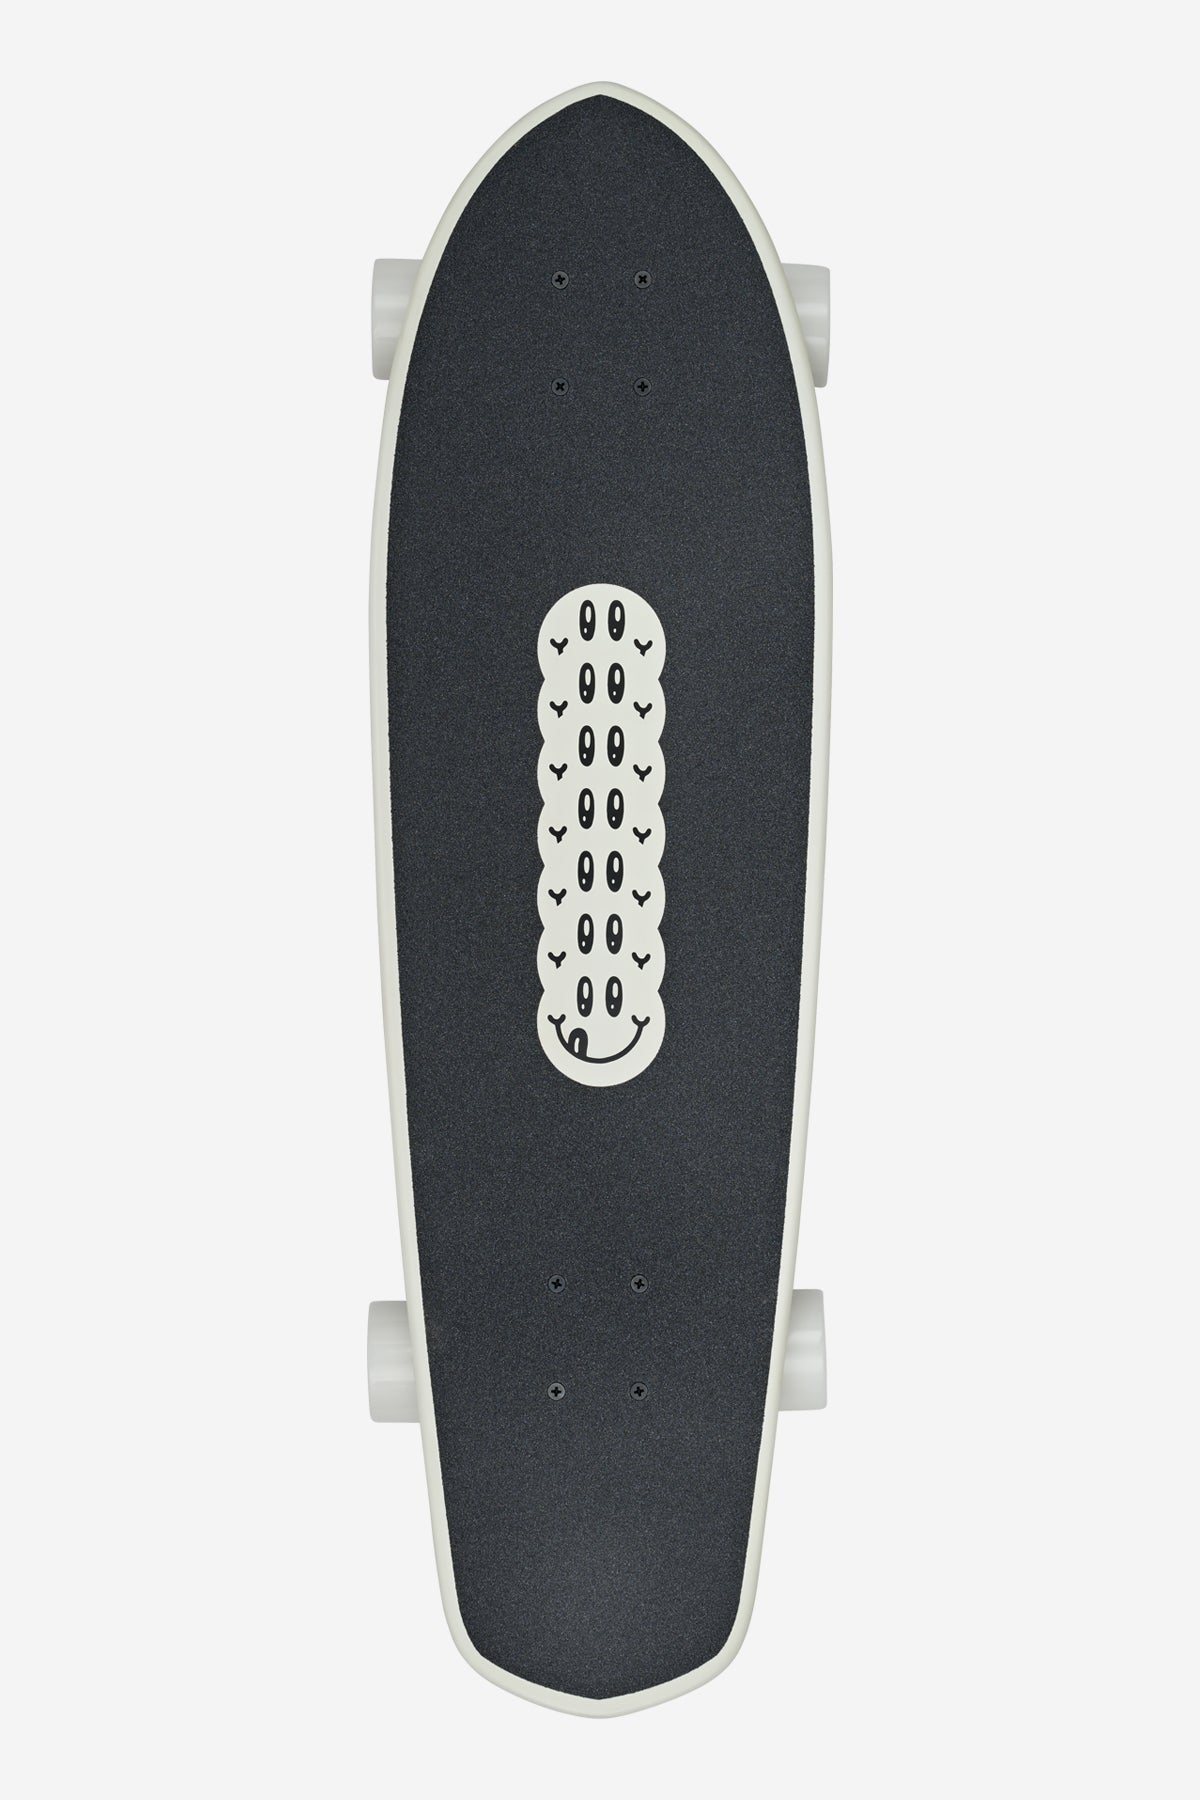 Globe Big Blazer 32" Complete Skateboard - Hypnagoga Longboard Skateboard